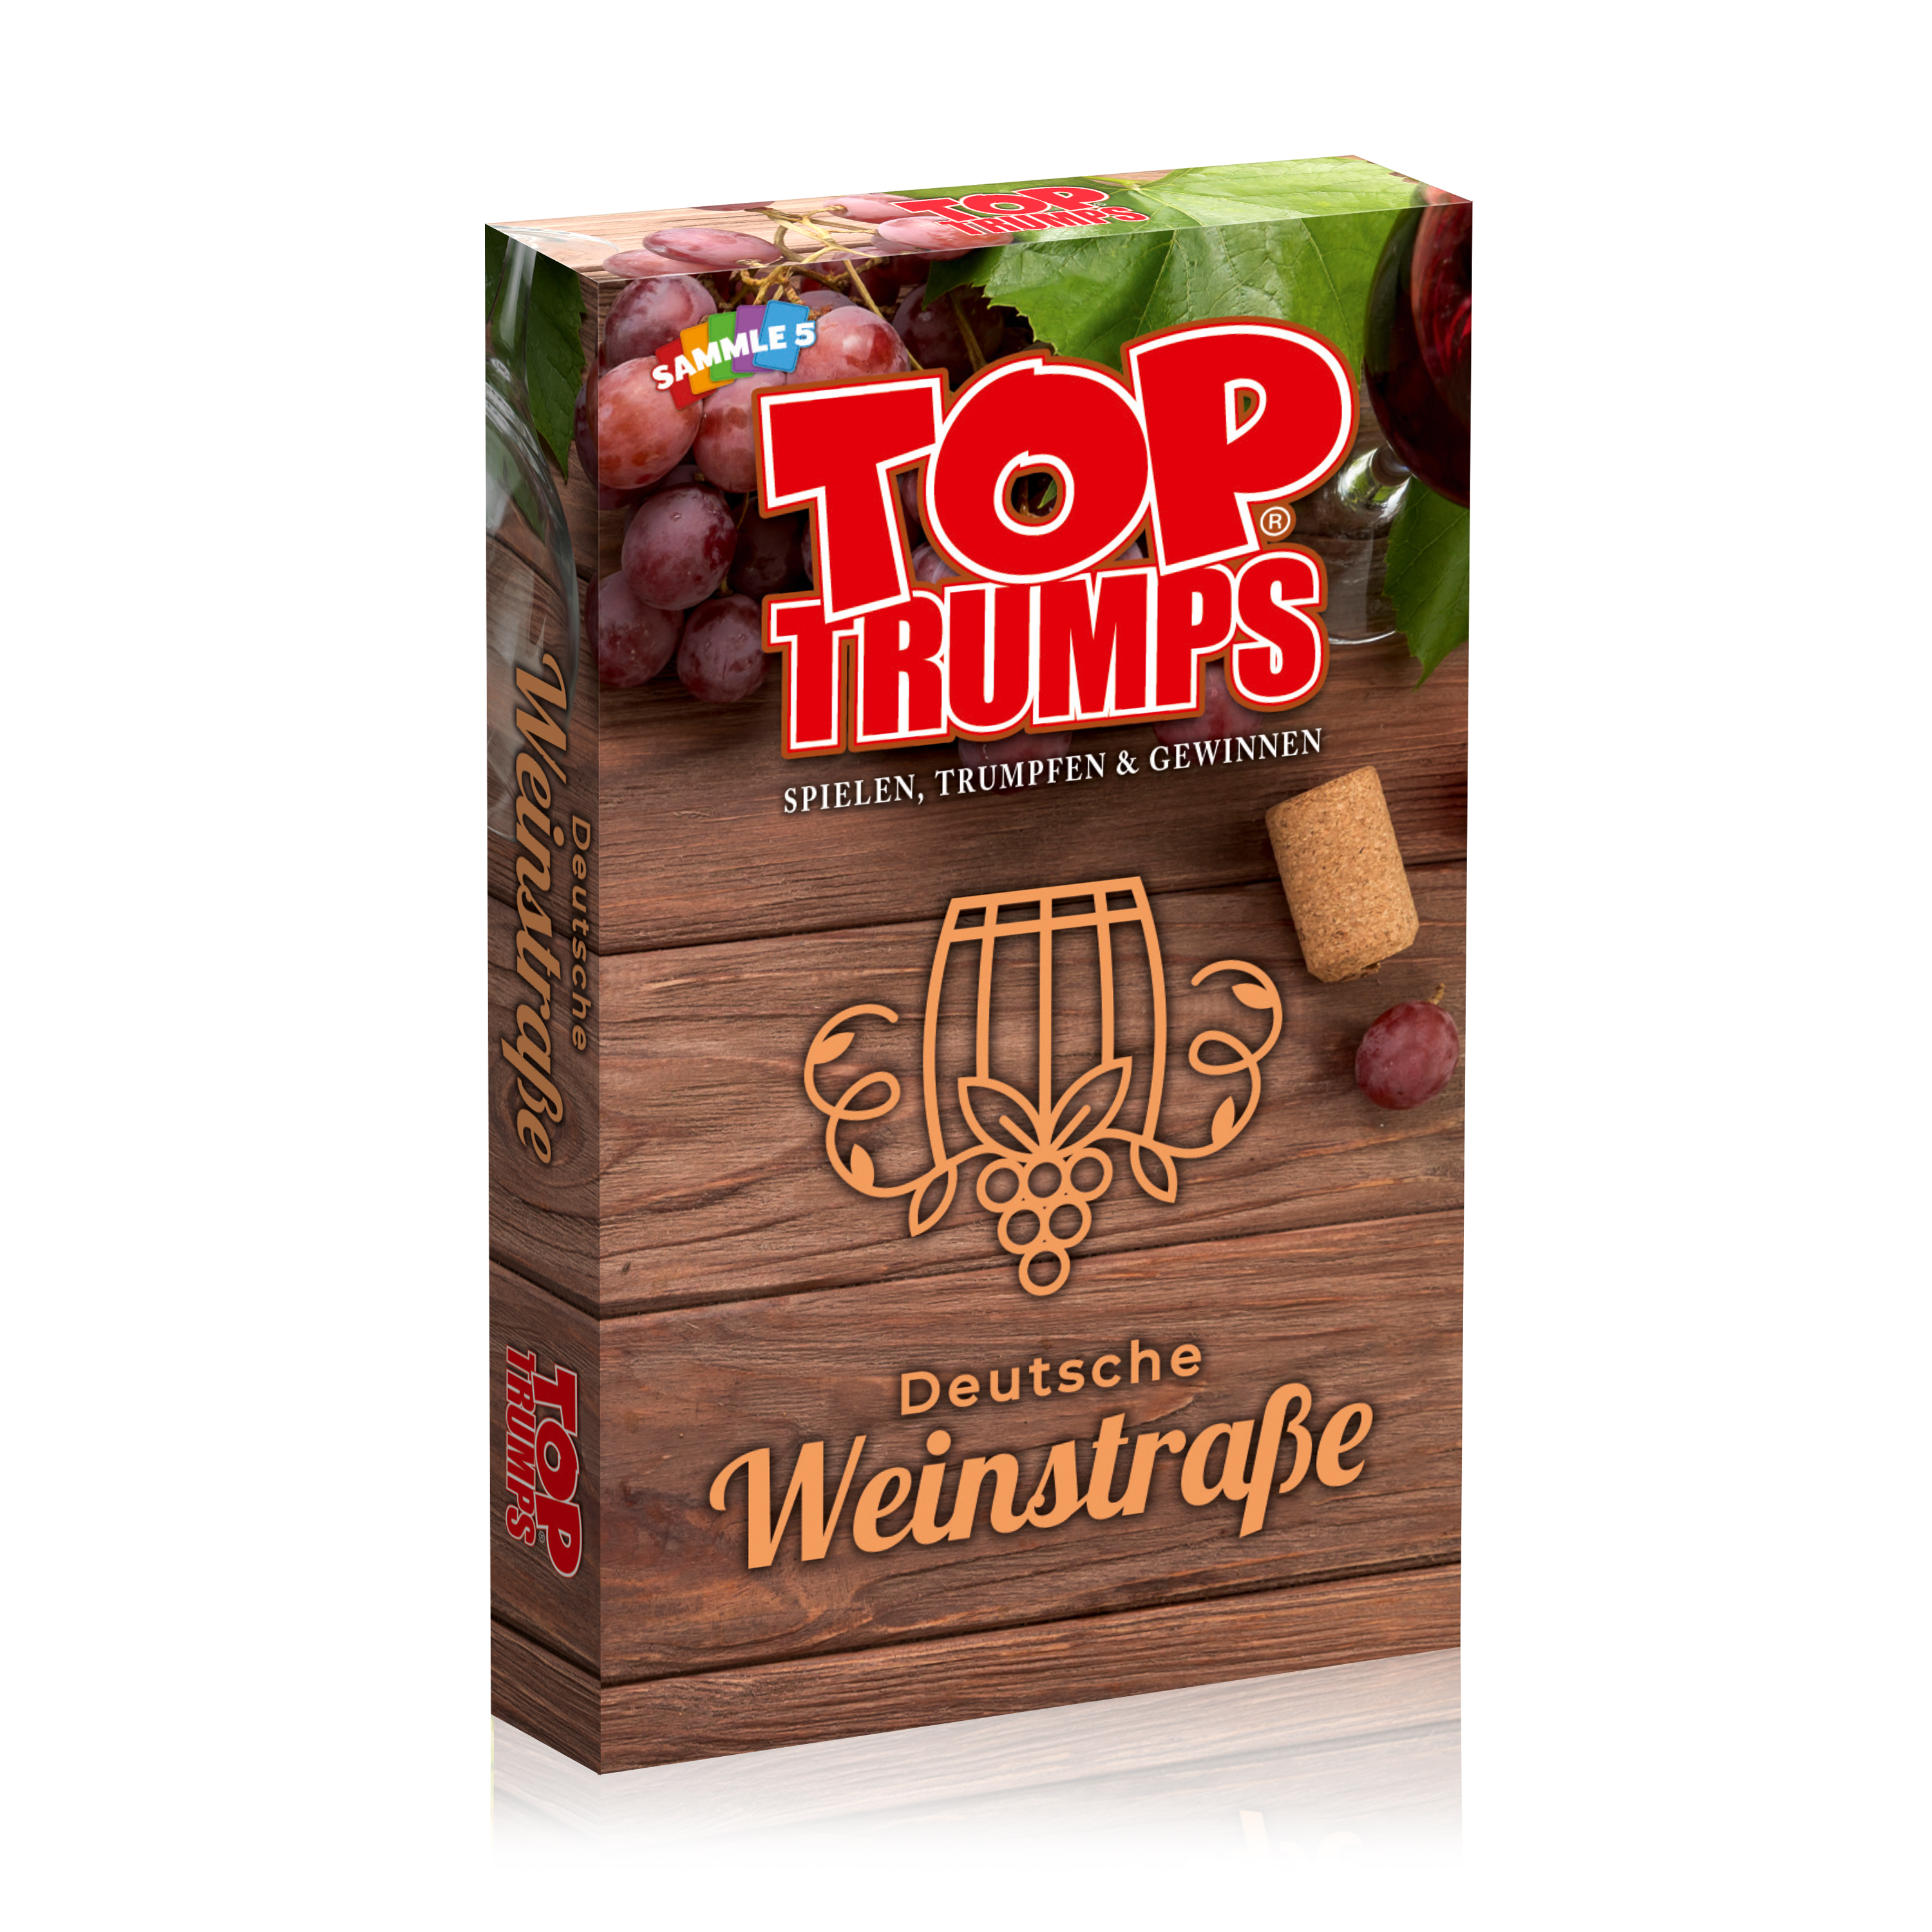 WINNING MOVES Monopoly Brettspiel - Deutsche Weinstrasse Top Trumps inkl